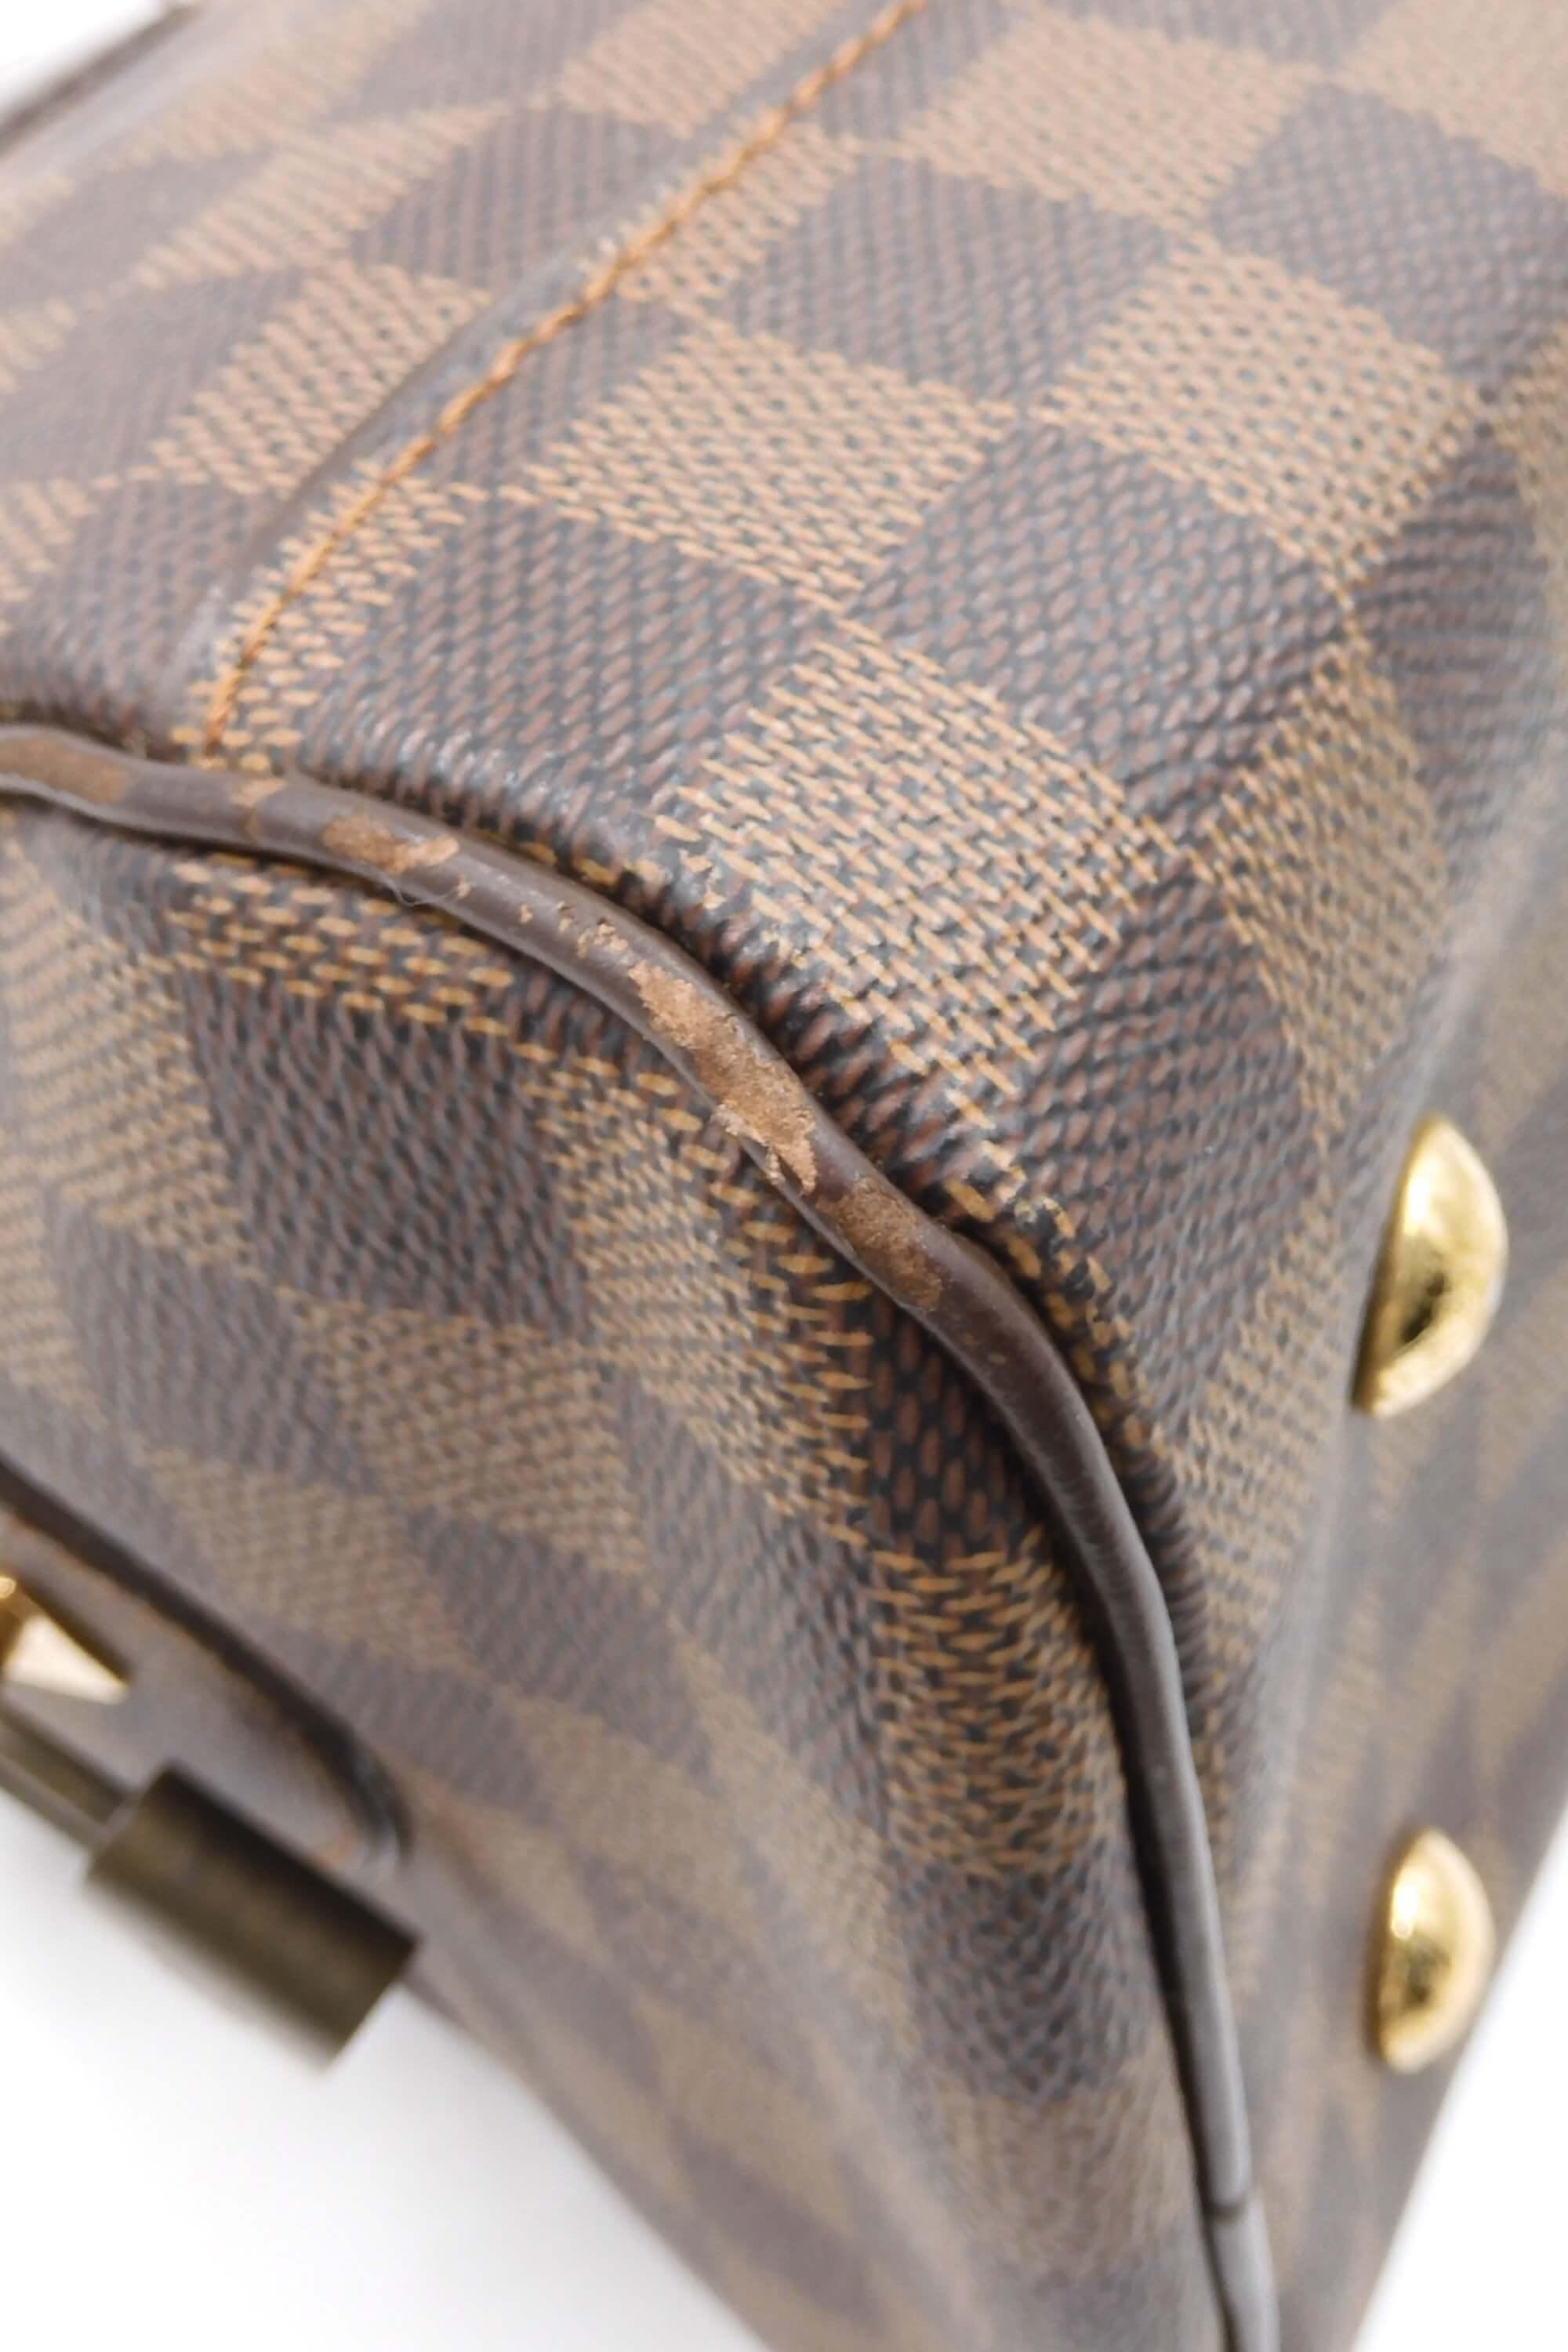 Louis Vuitton Damier Ebene Odéon Tote PM - Brown Handle Bags